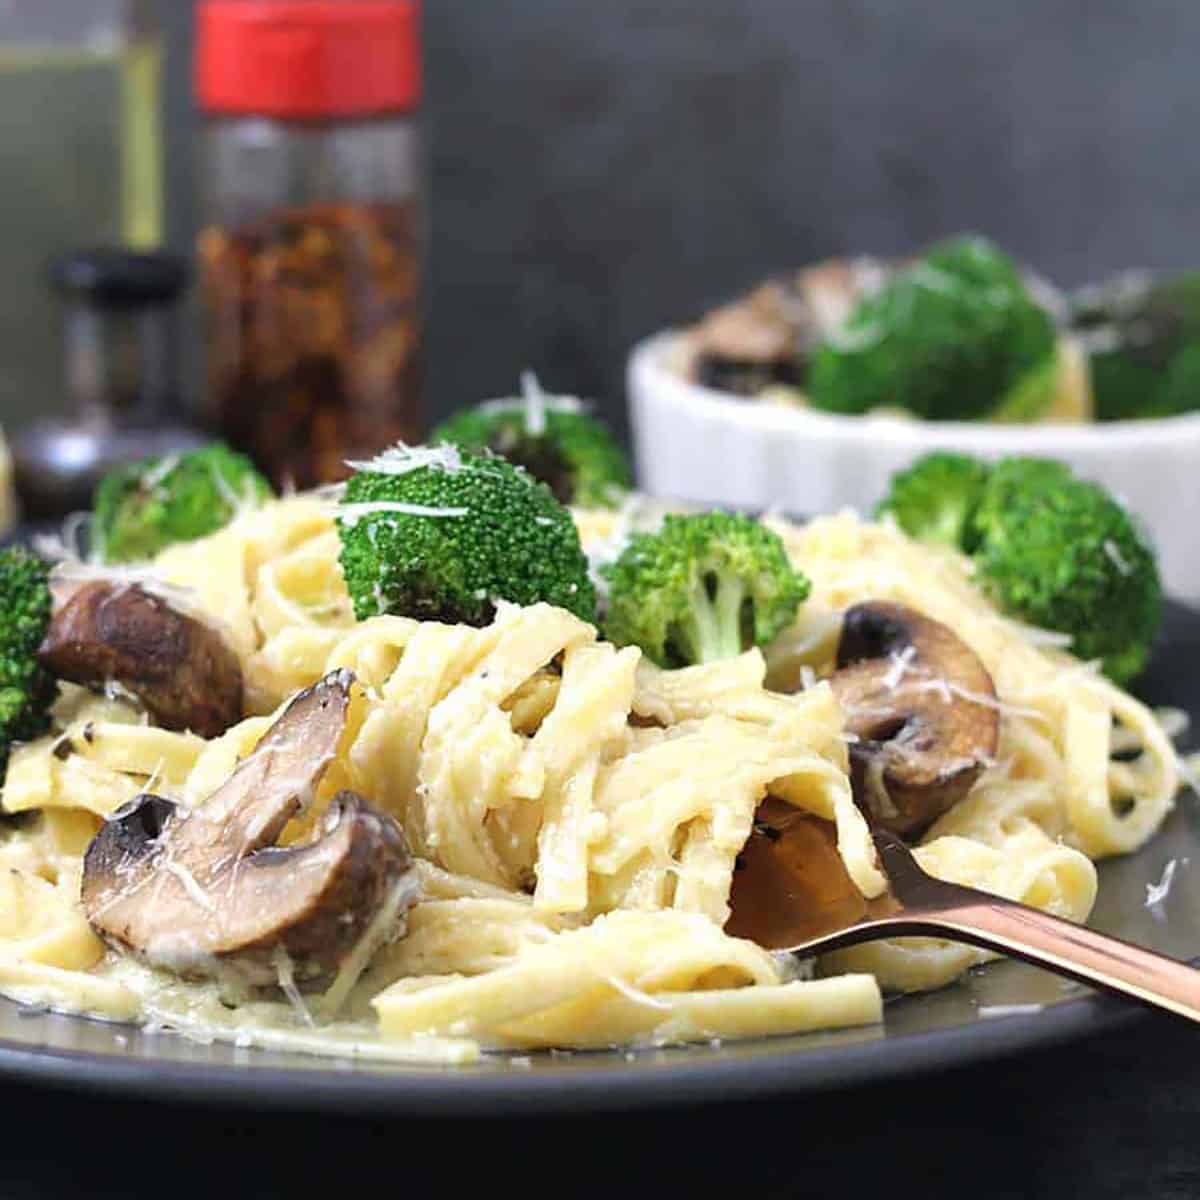 Best fettuccine alfredo with homemade alfredo sauce, mushroom, and broccoli. Vegetarian pasta.